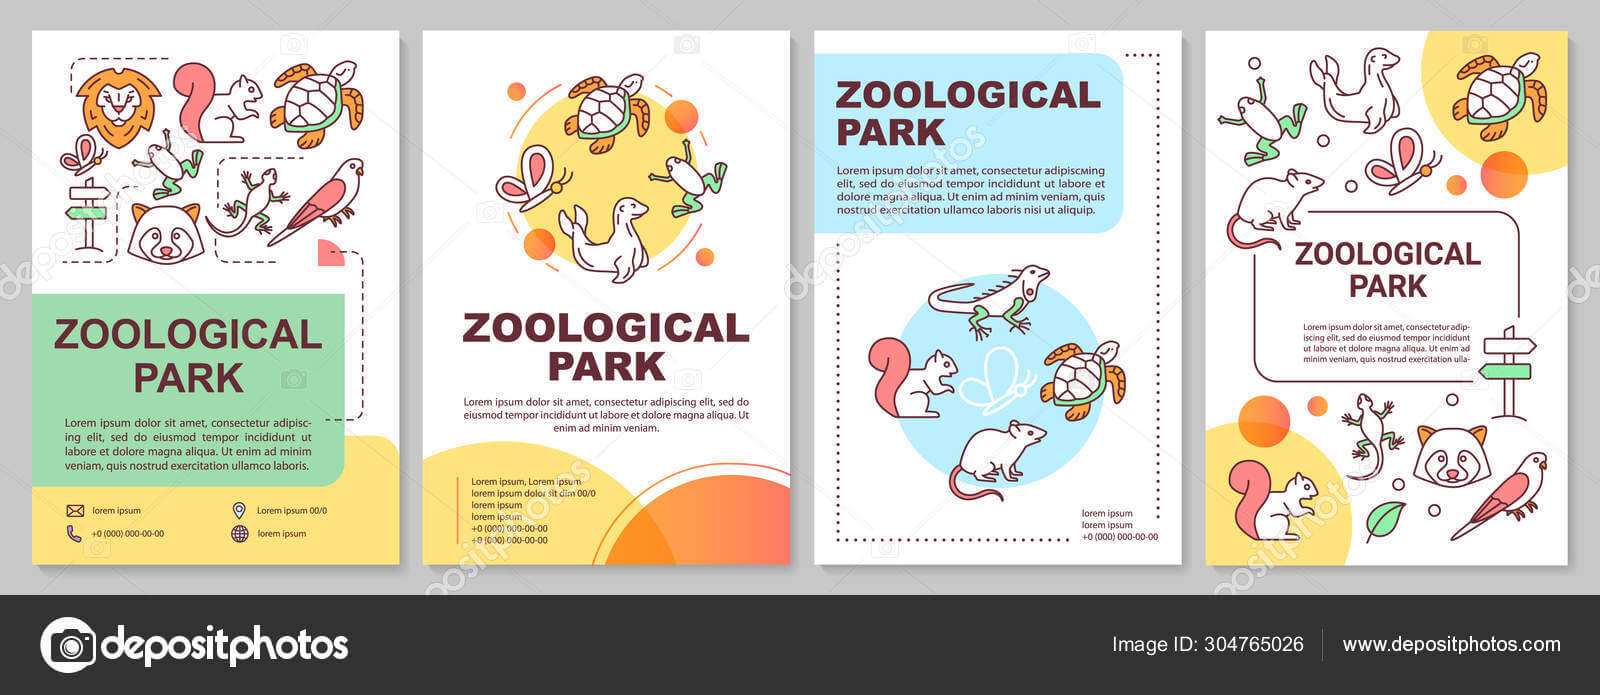 Zoological Park Brochure Template Layout. Zoo Animals. Flyer Regarding Zoo Brochure Template